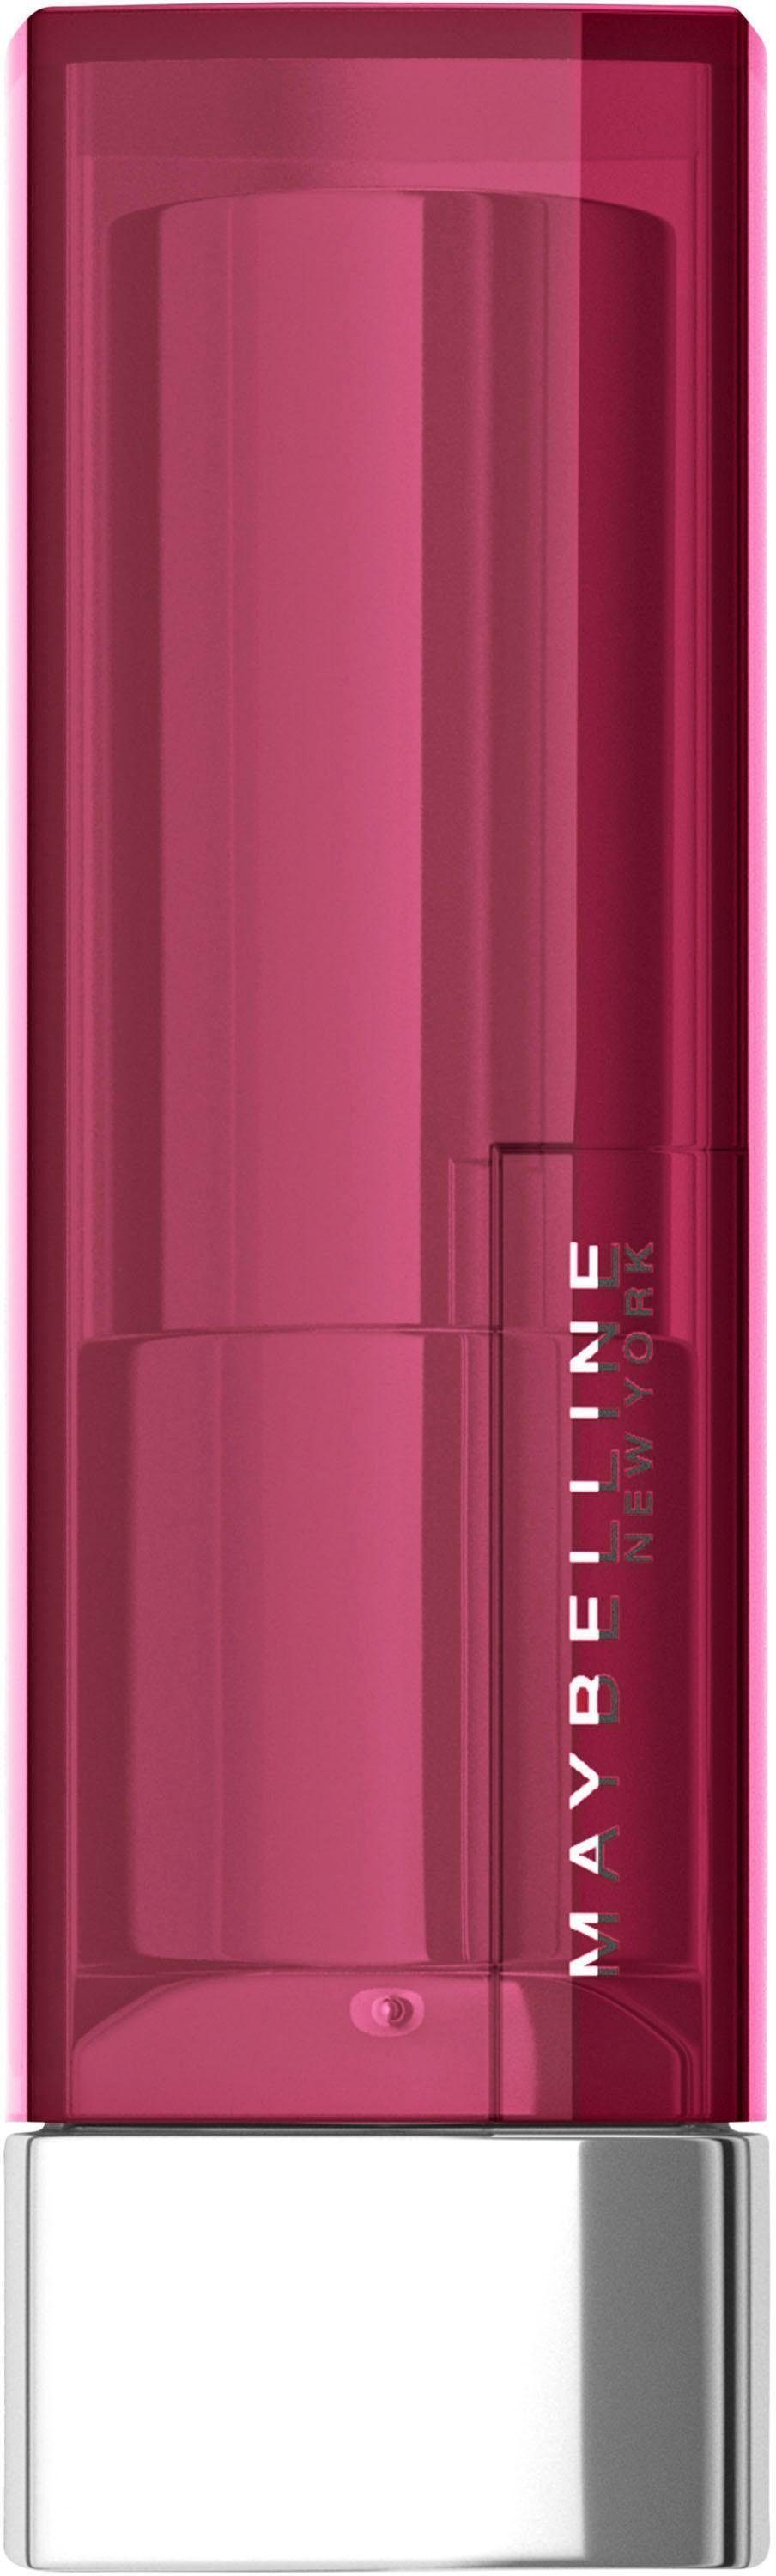 MAYBELLINE NEW Lippenstift Creams YORK Pink Color 233 Sensational Pose the